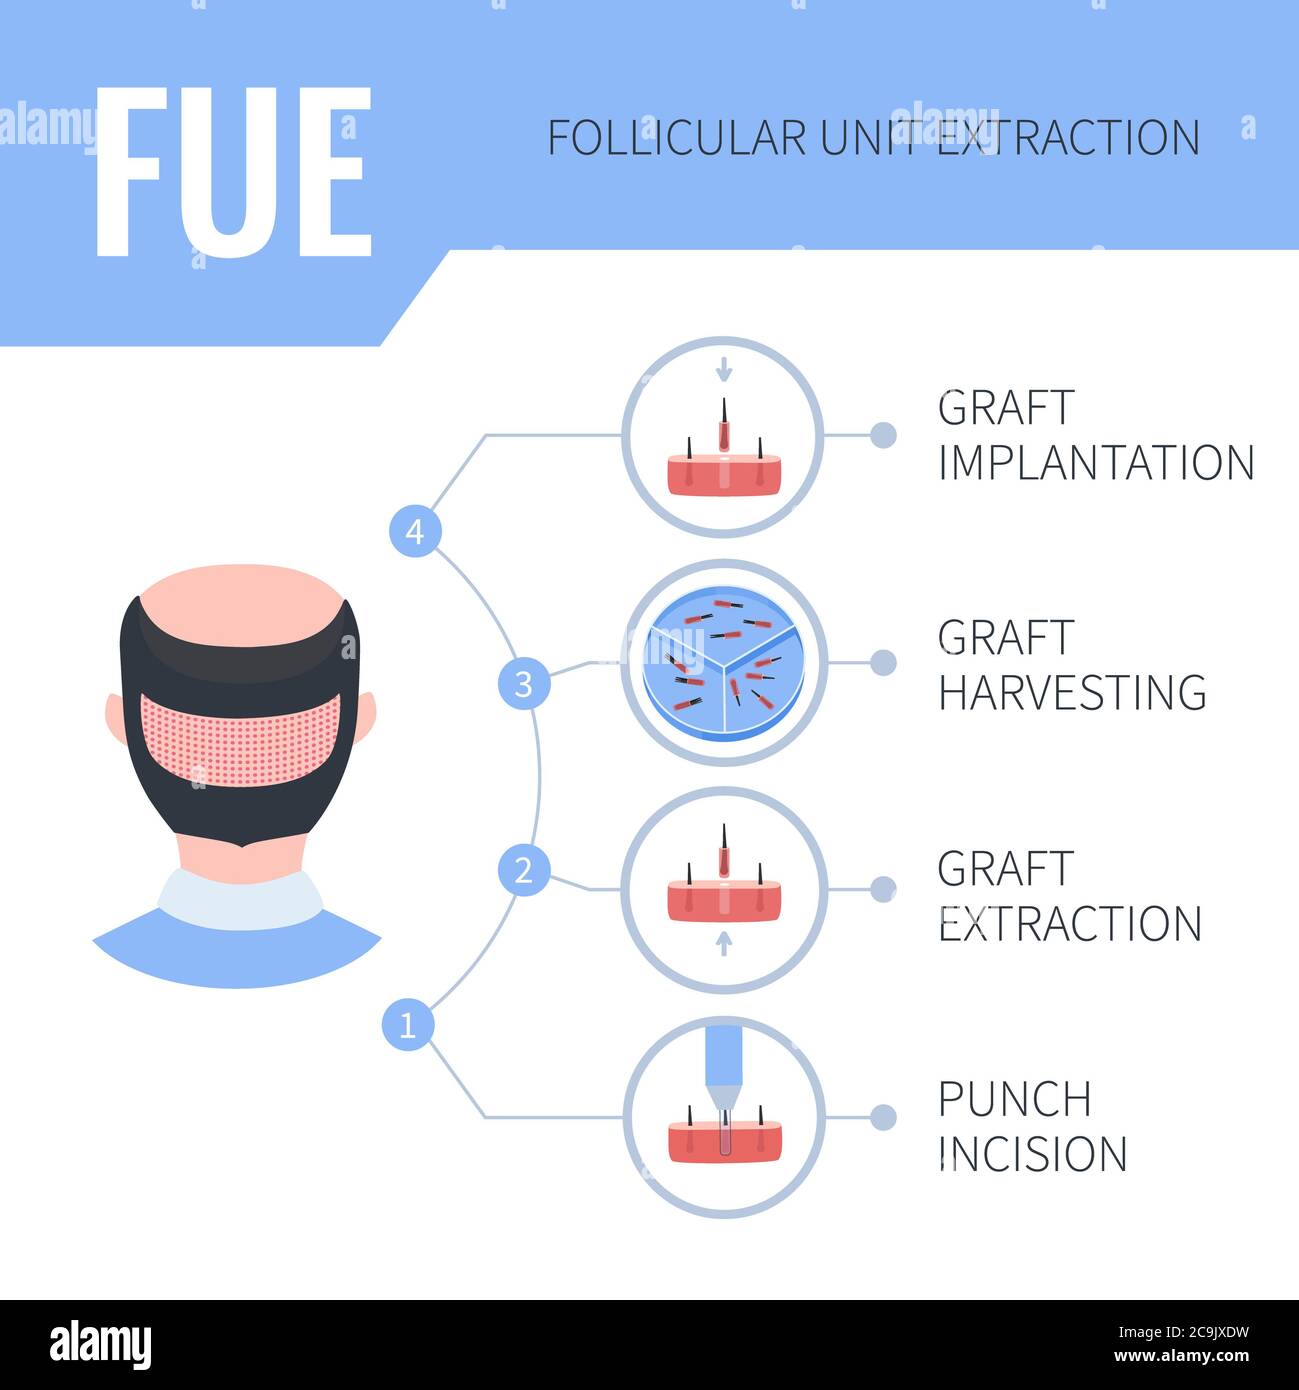 Follicular unit extraction (FUE) hair transplantation in men, illustration. Stock Photo